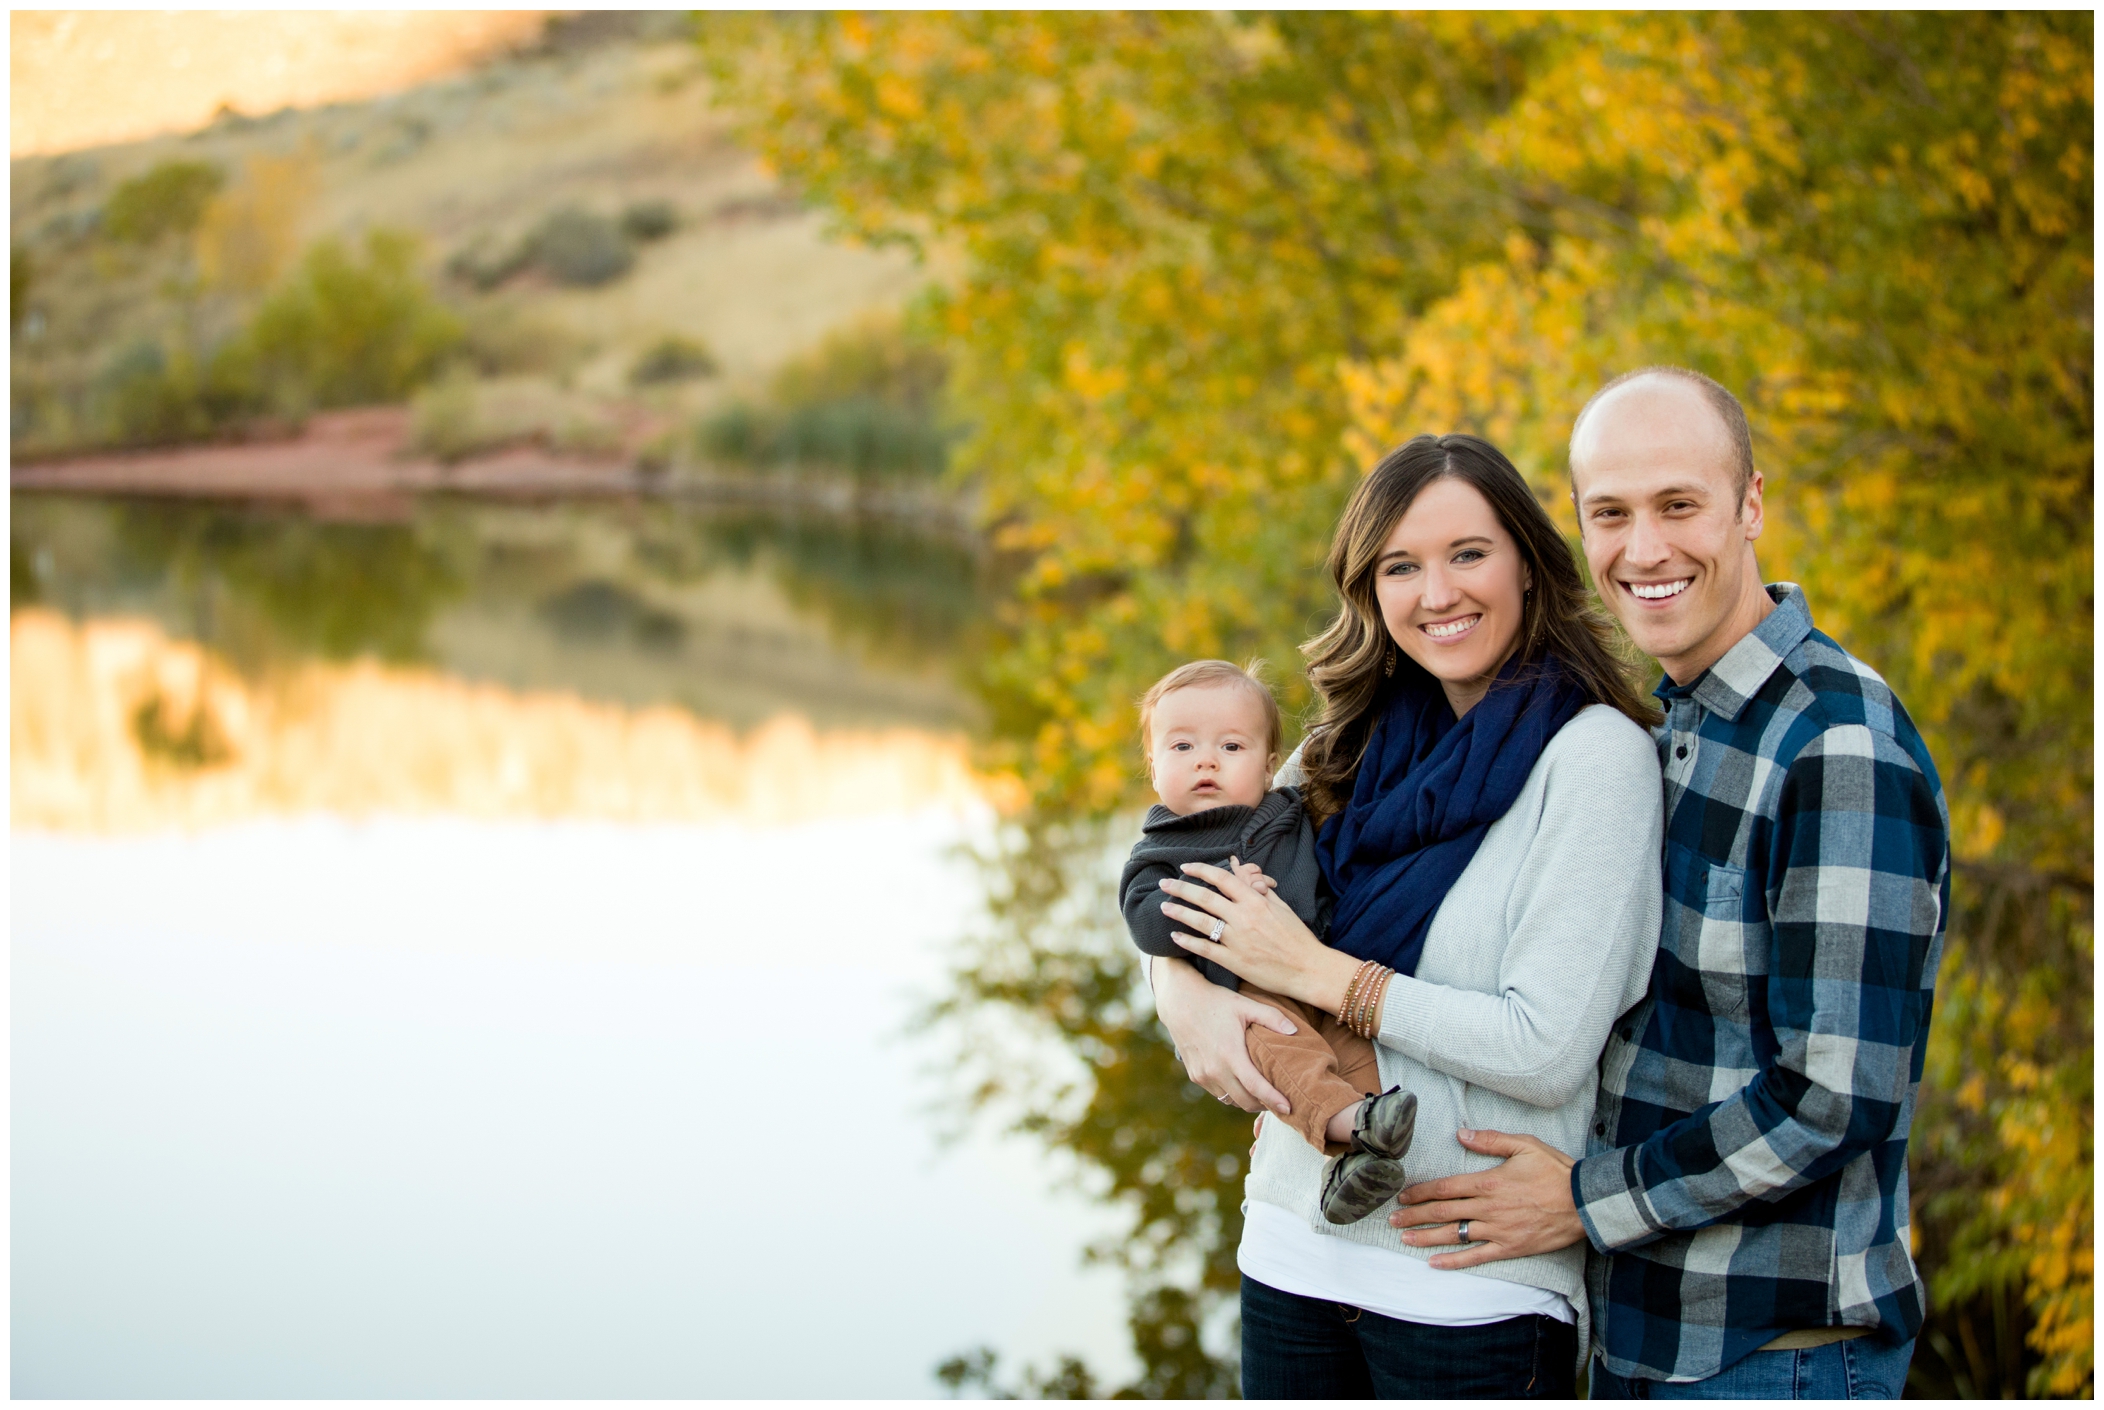 Colorado family photos inspiration 